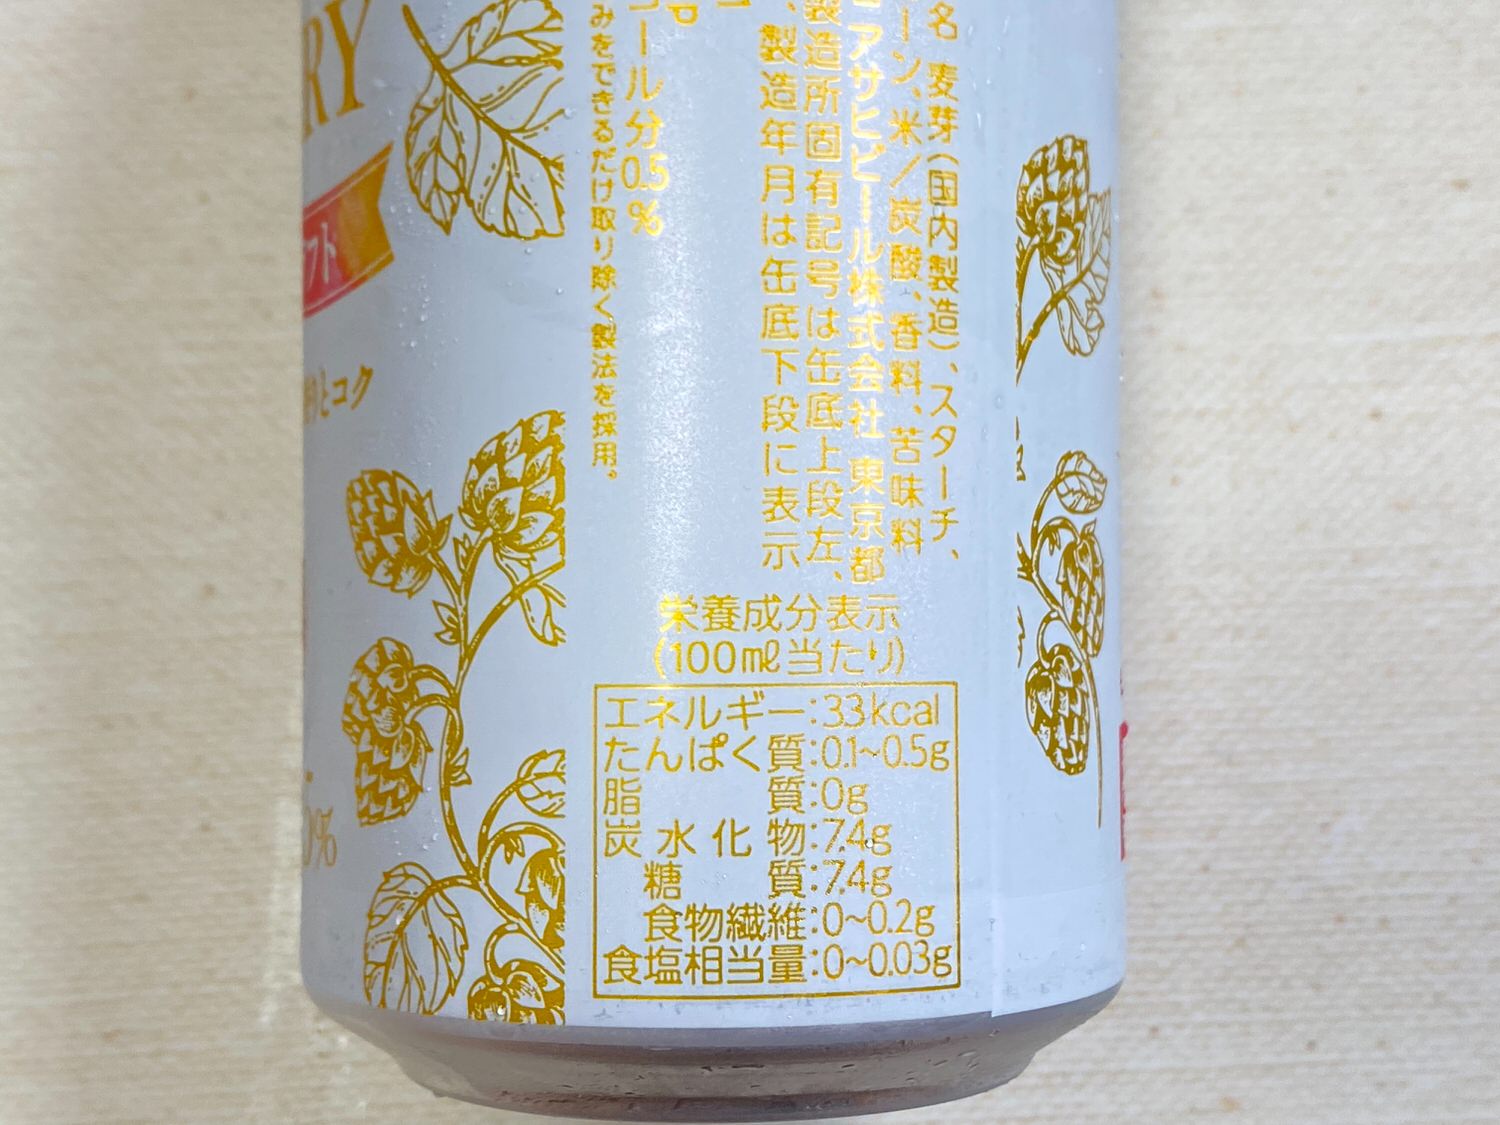 Asahi beery 2 04 04